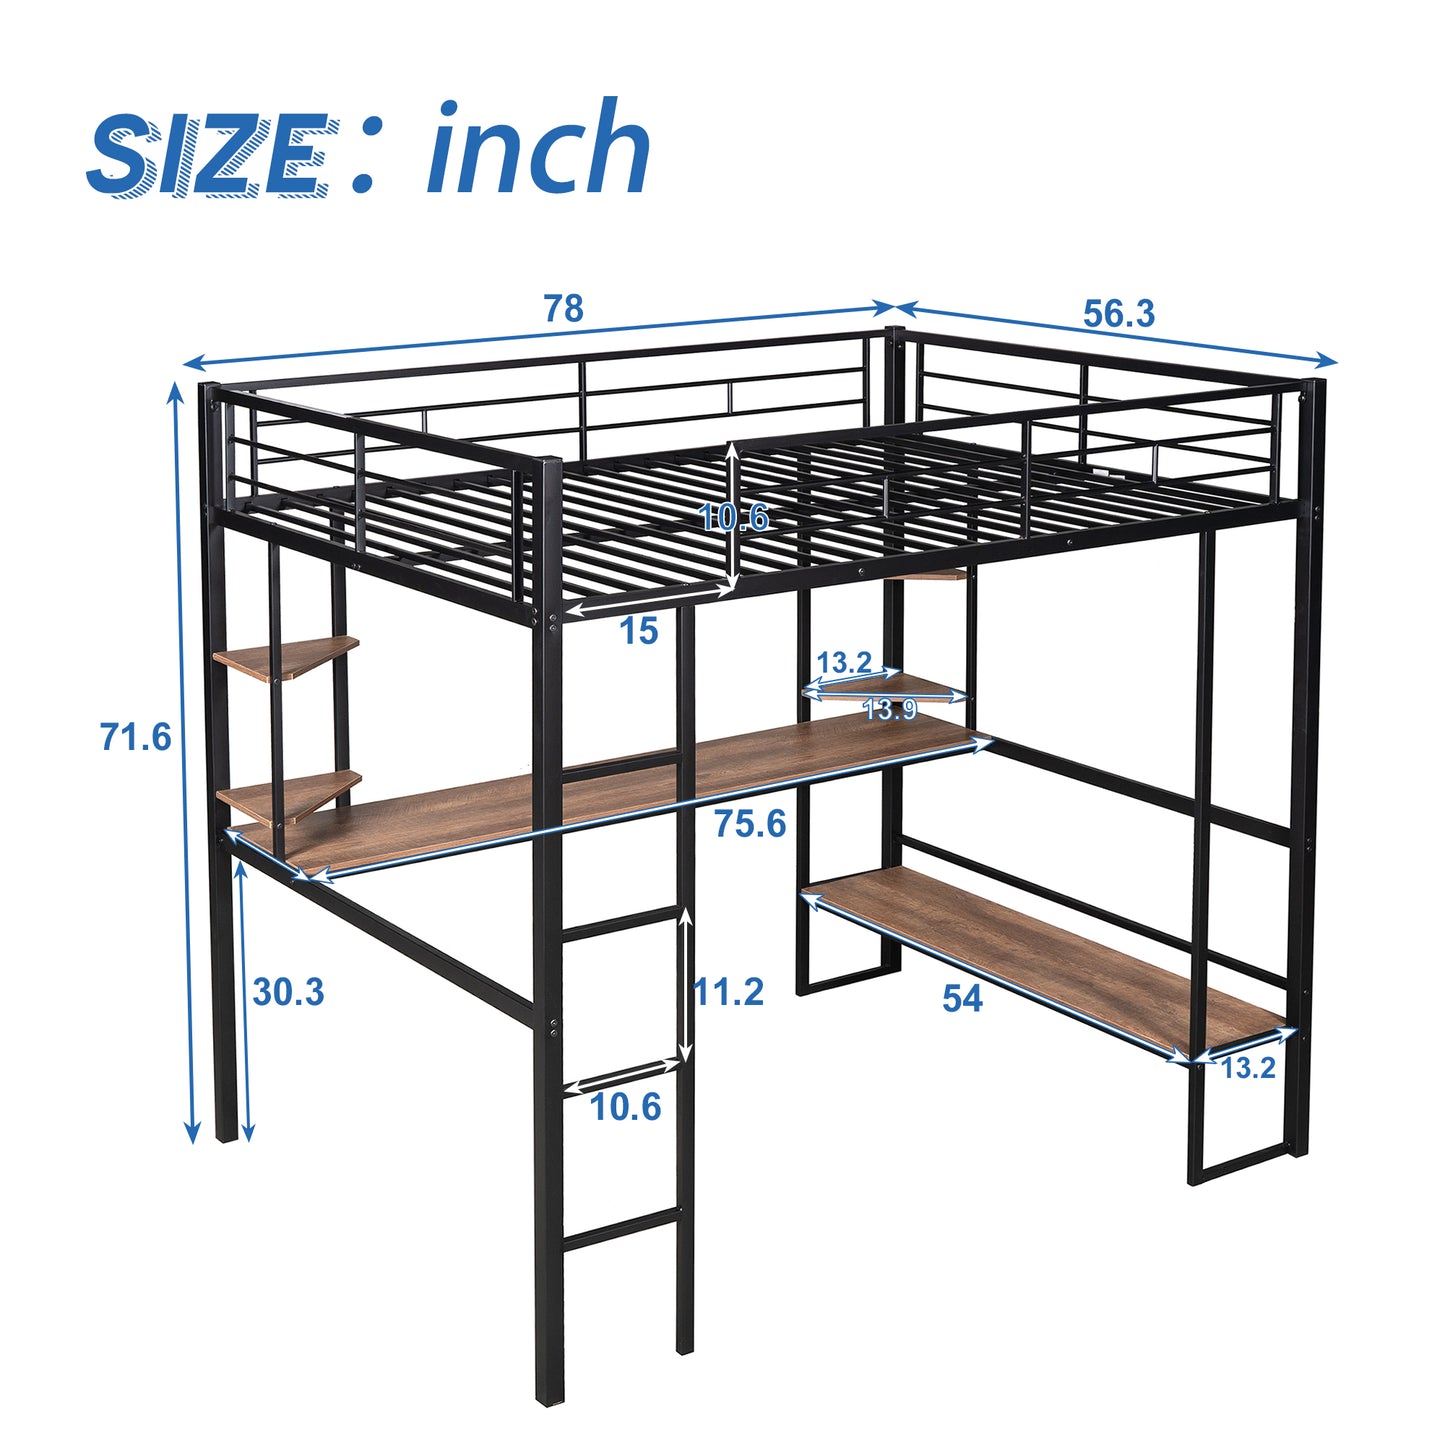 Full Loft Bed, New Upgraded Metal Bunk Bed with Long Desk & Shelves, Full Size Bed Frame No Box Spring Needed, Loft Bed with Vertical Ladder, Full Bunk Bed Kids Bedroom Furniture, Black